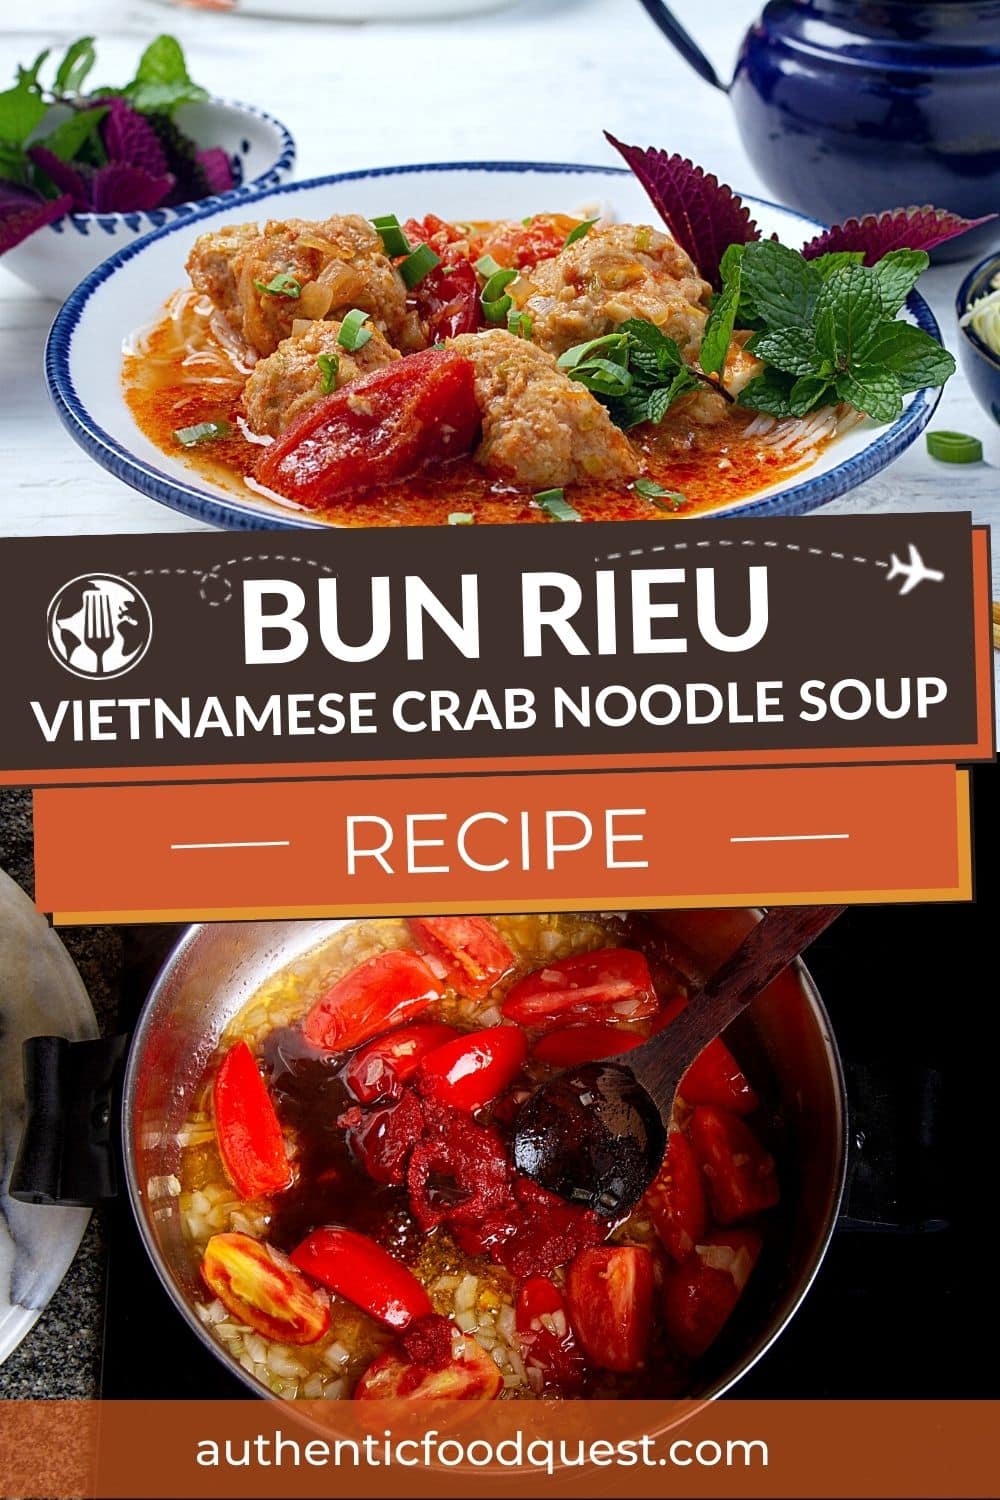 Bun Rieu Recipe: How To Make Vietnamese Crab Noodle Soup